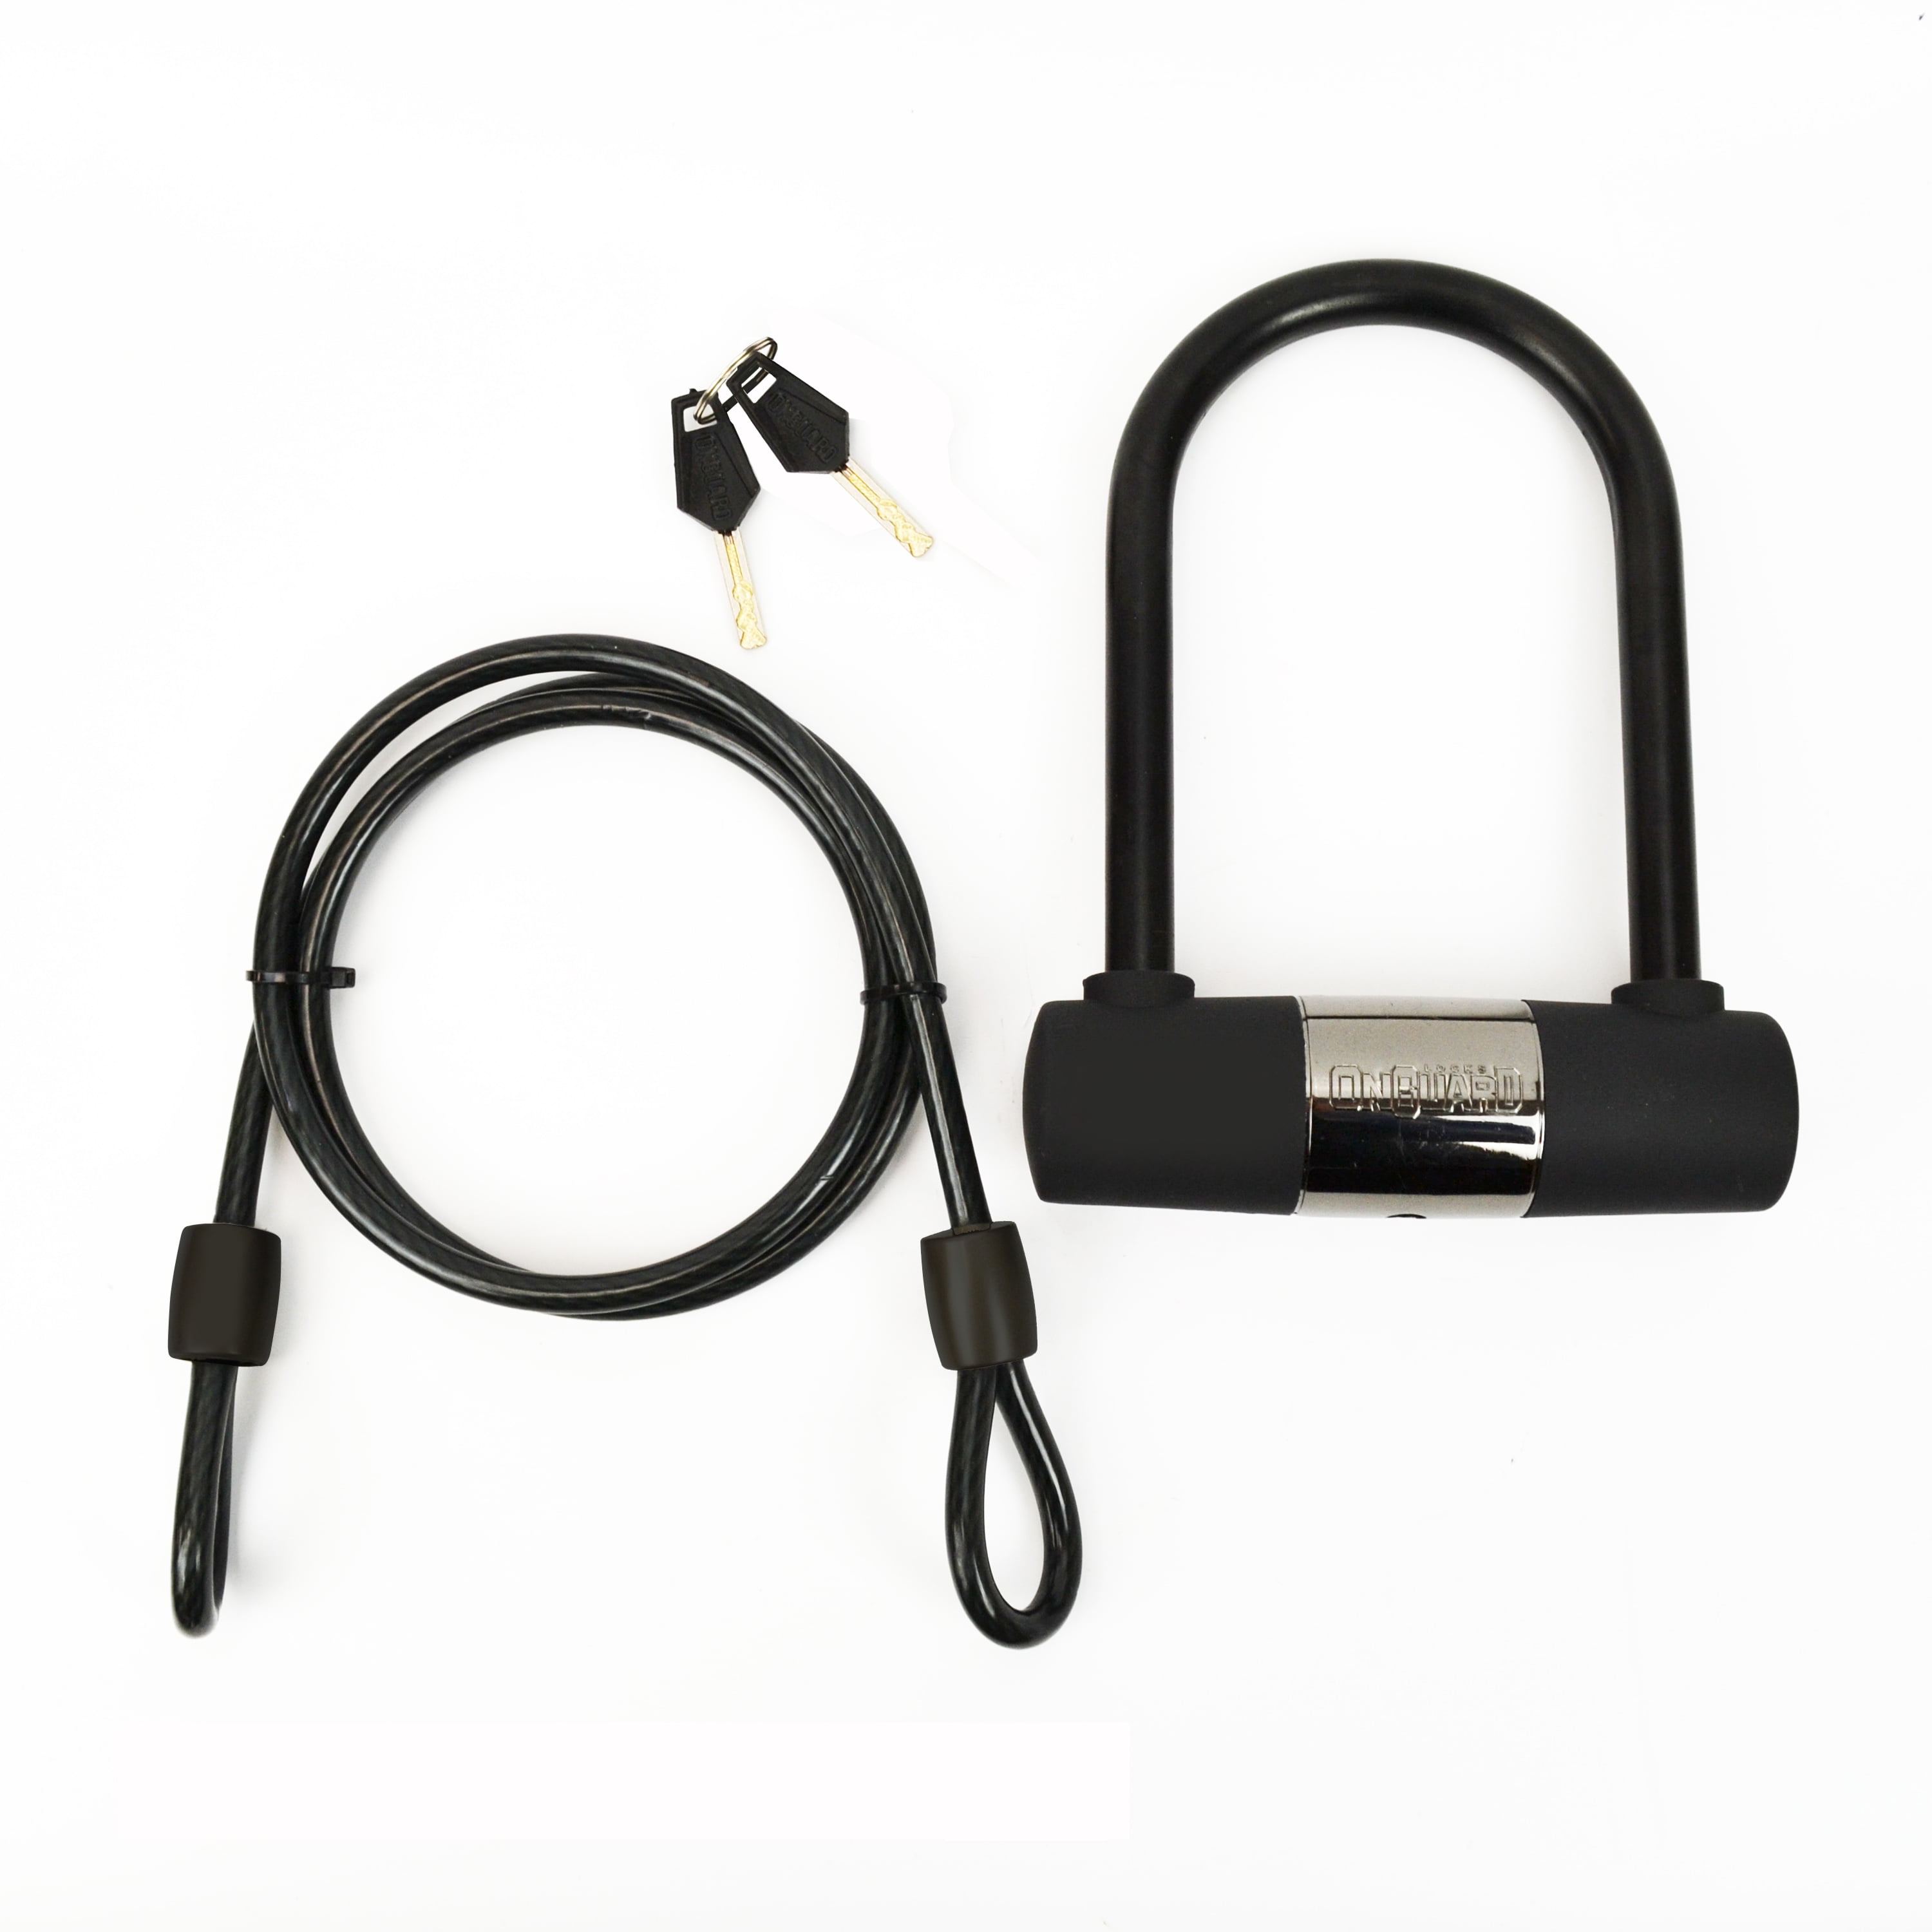 OnGuard Bike U-Lock and 4-Foot Cable (Strong Bike Lock,  2 Keys Included)